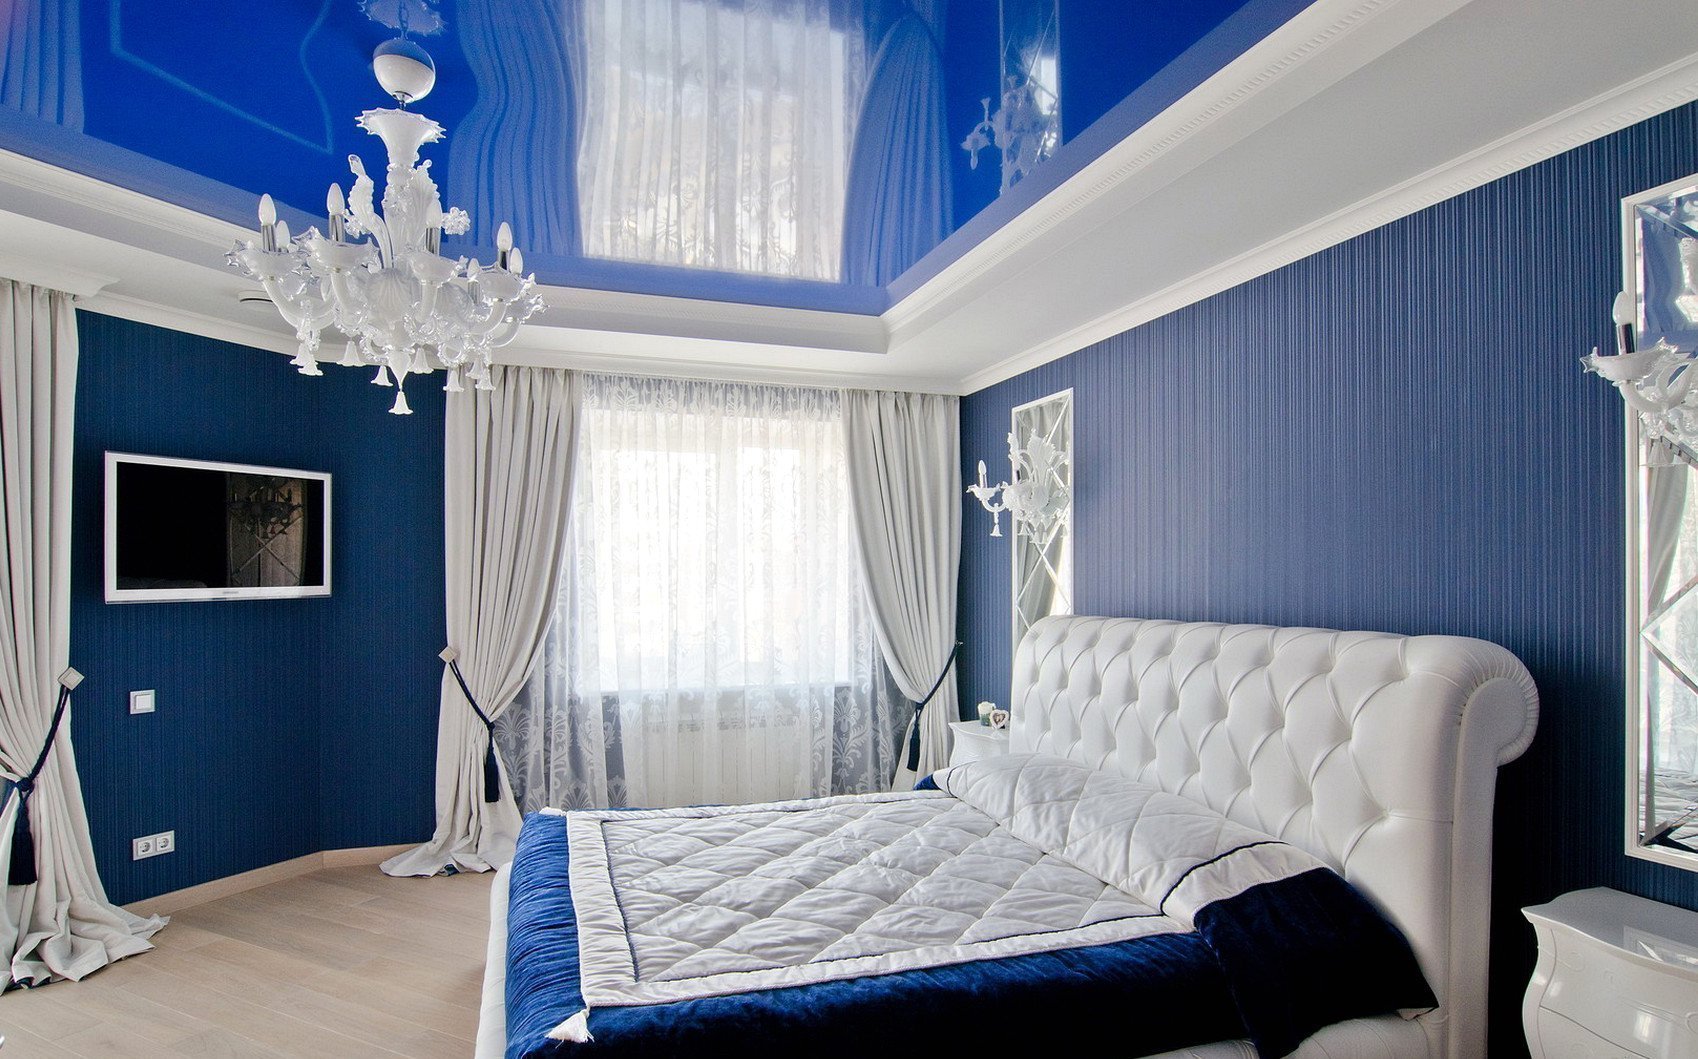 bedroom in blue color photo ideas